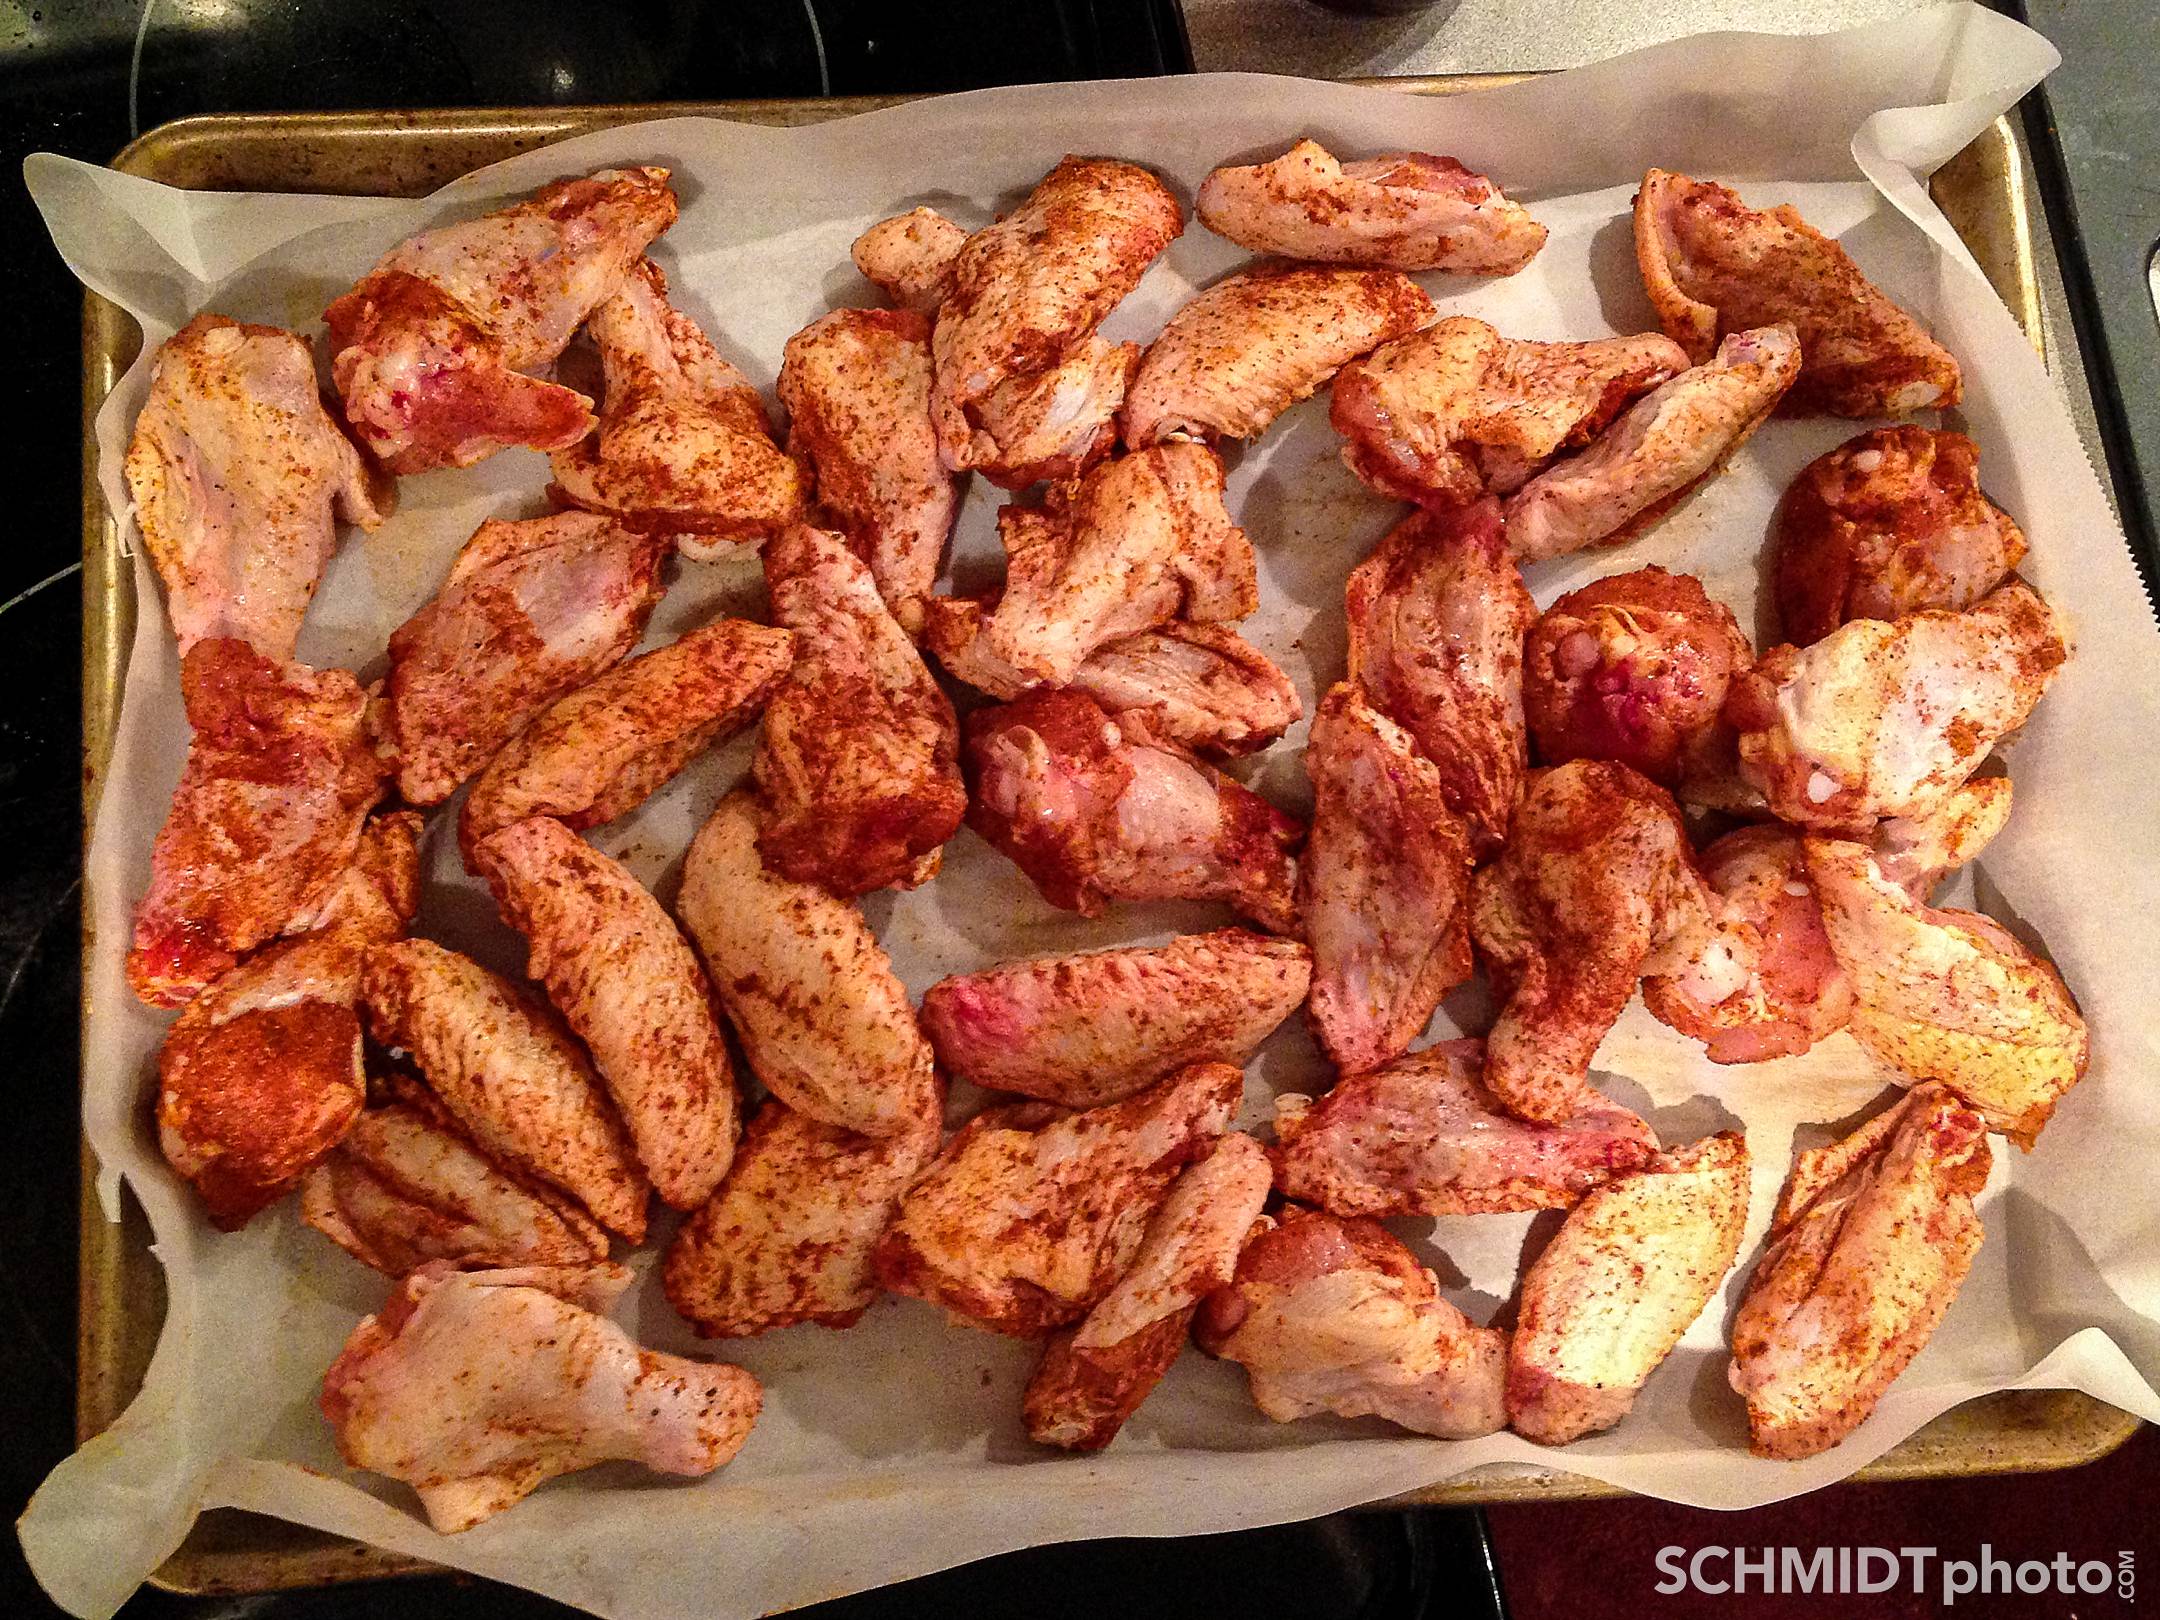 chicken hot wings oven roasted tom schmidt photo